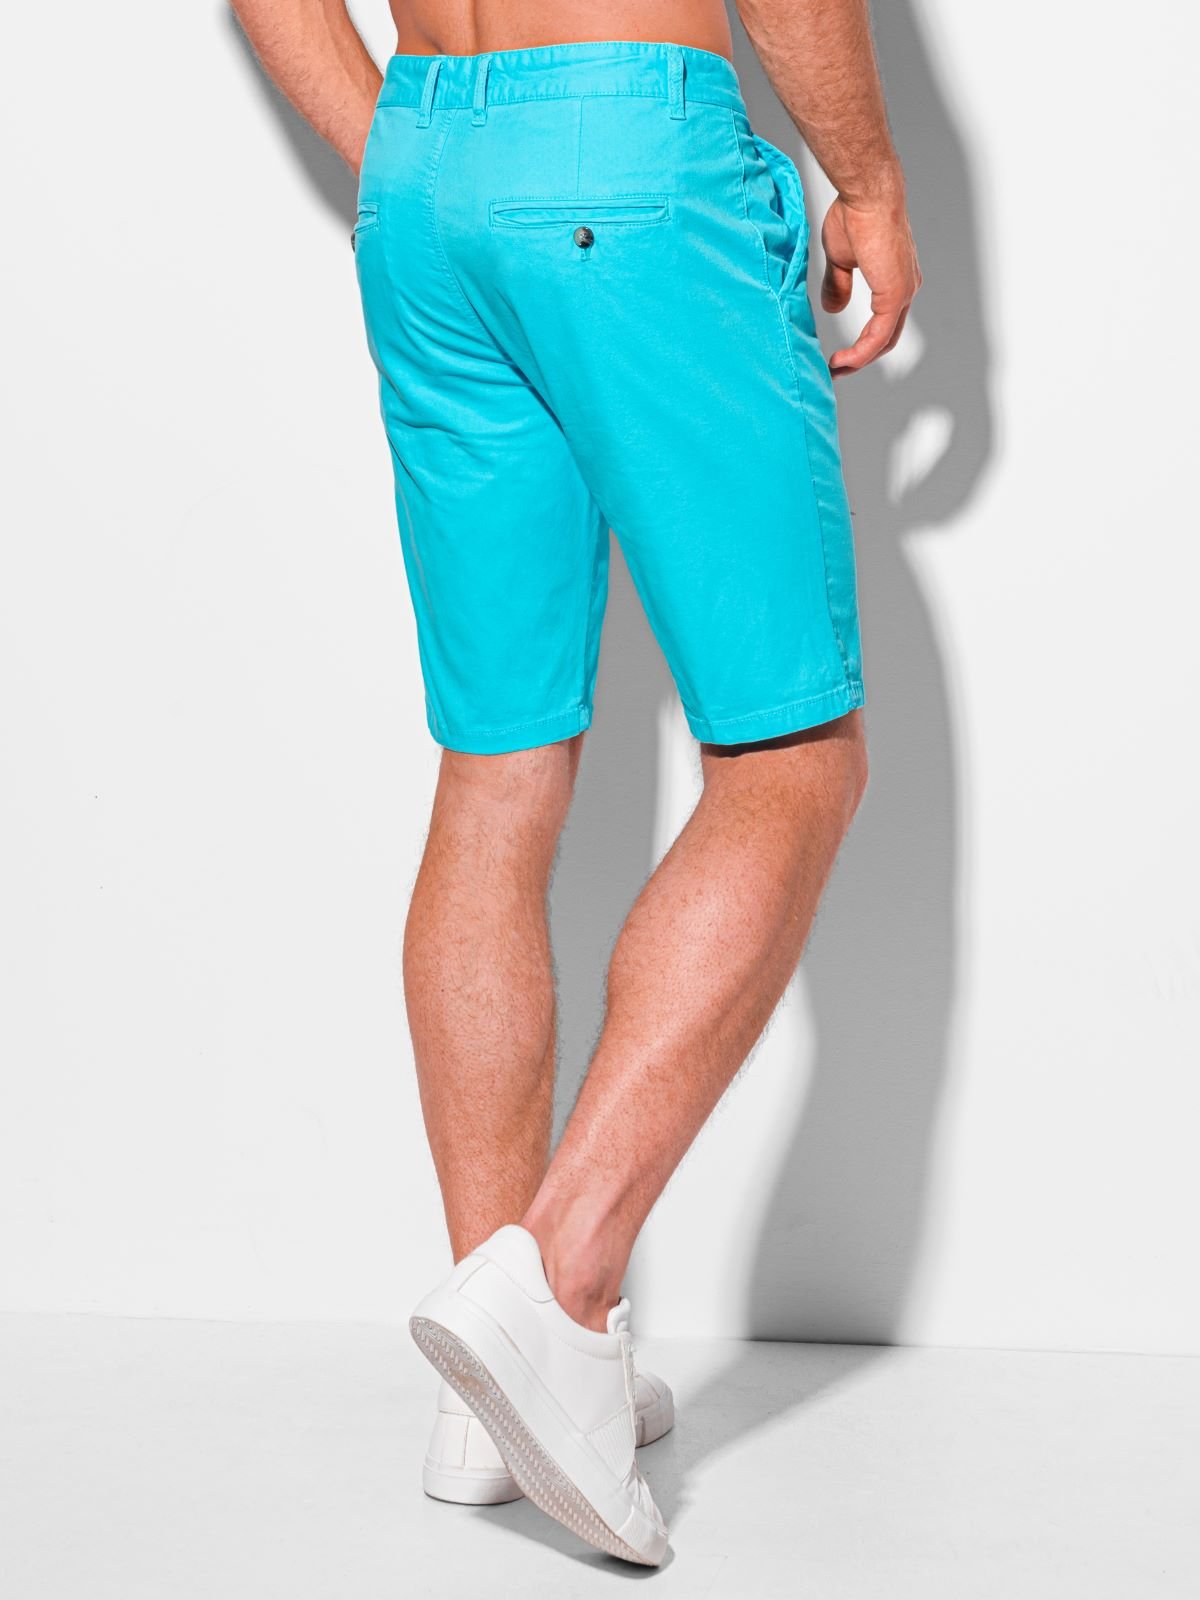 Men's chino shorts W341 - turquoise | MODONE wholesale - Clothing